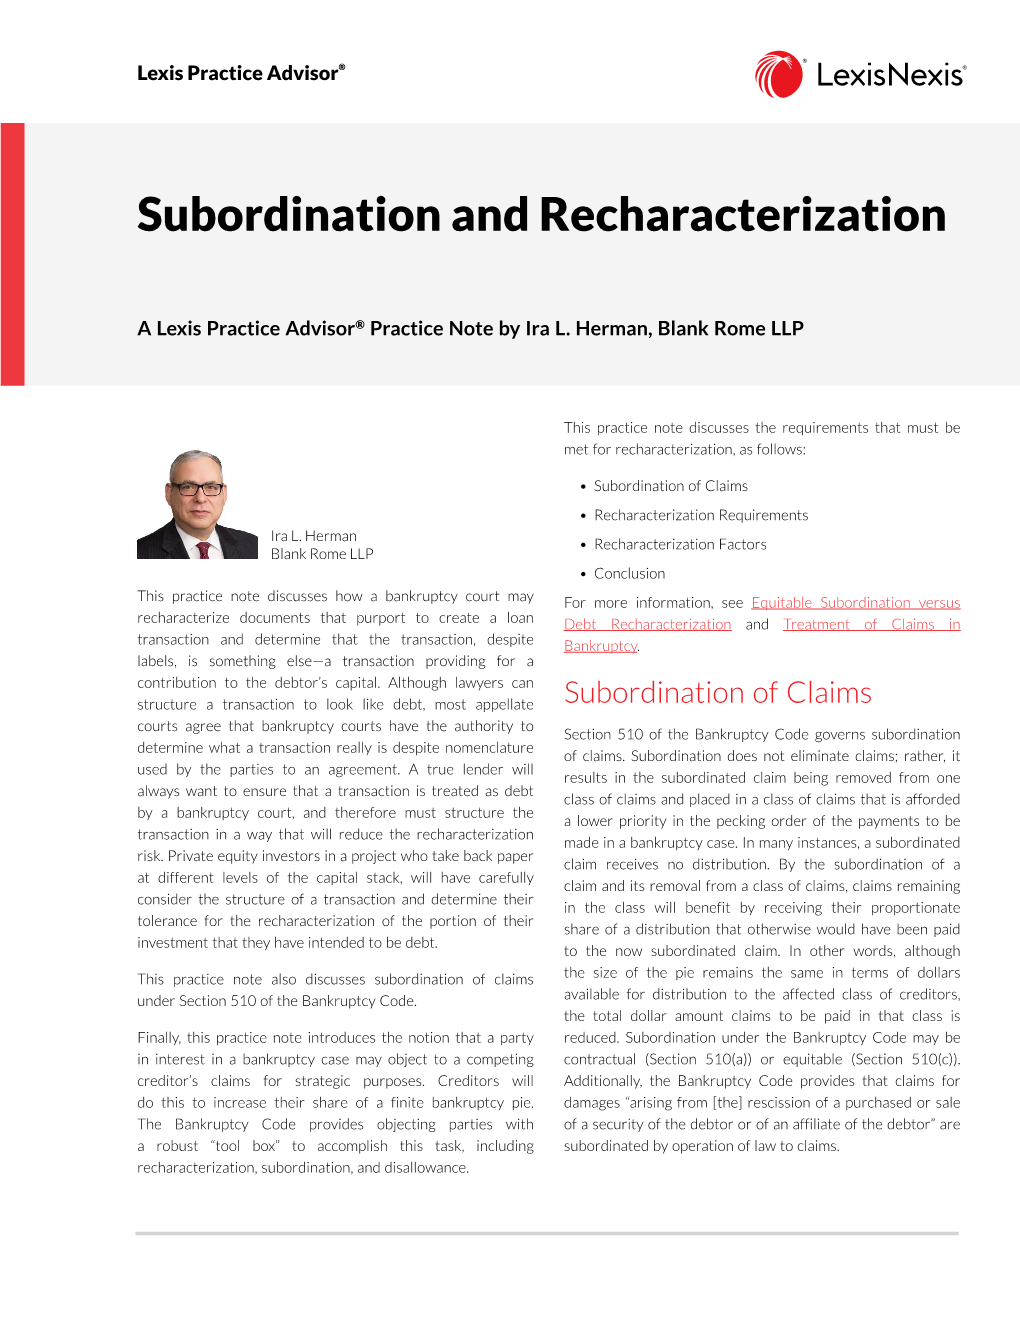 Subordination and Recharacterization